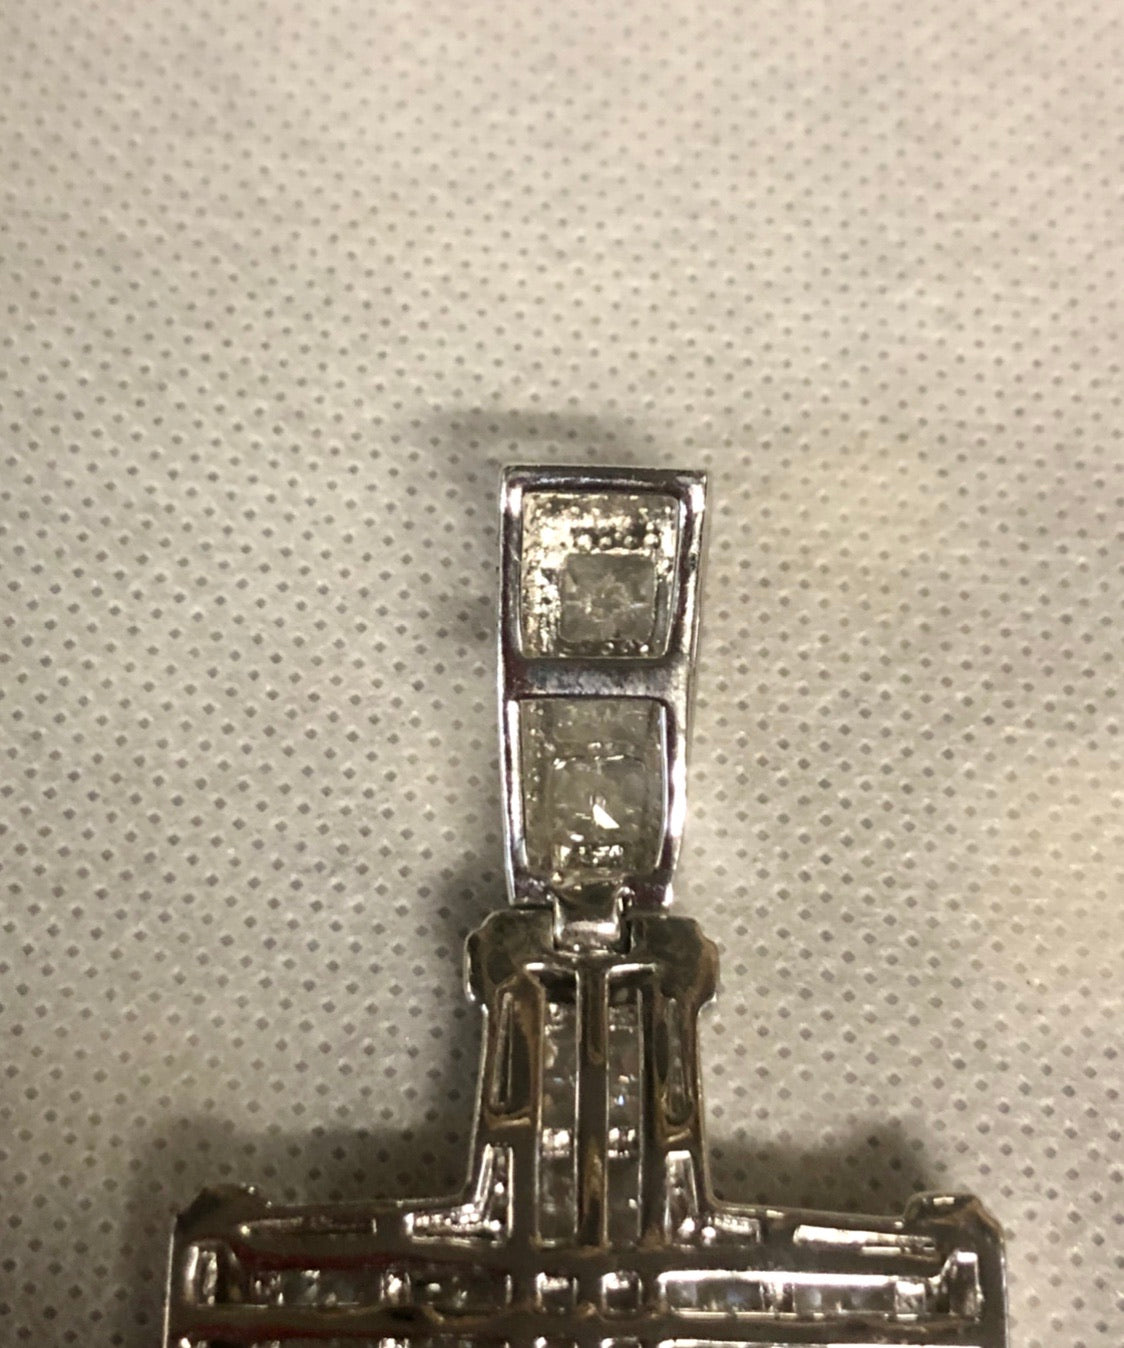 A 925 silver cross pendant with diamonds.